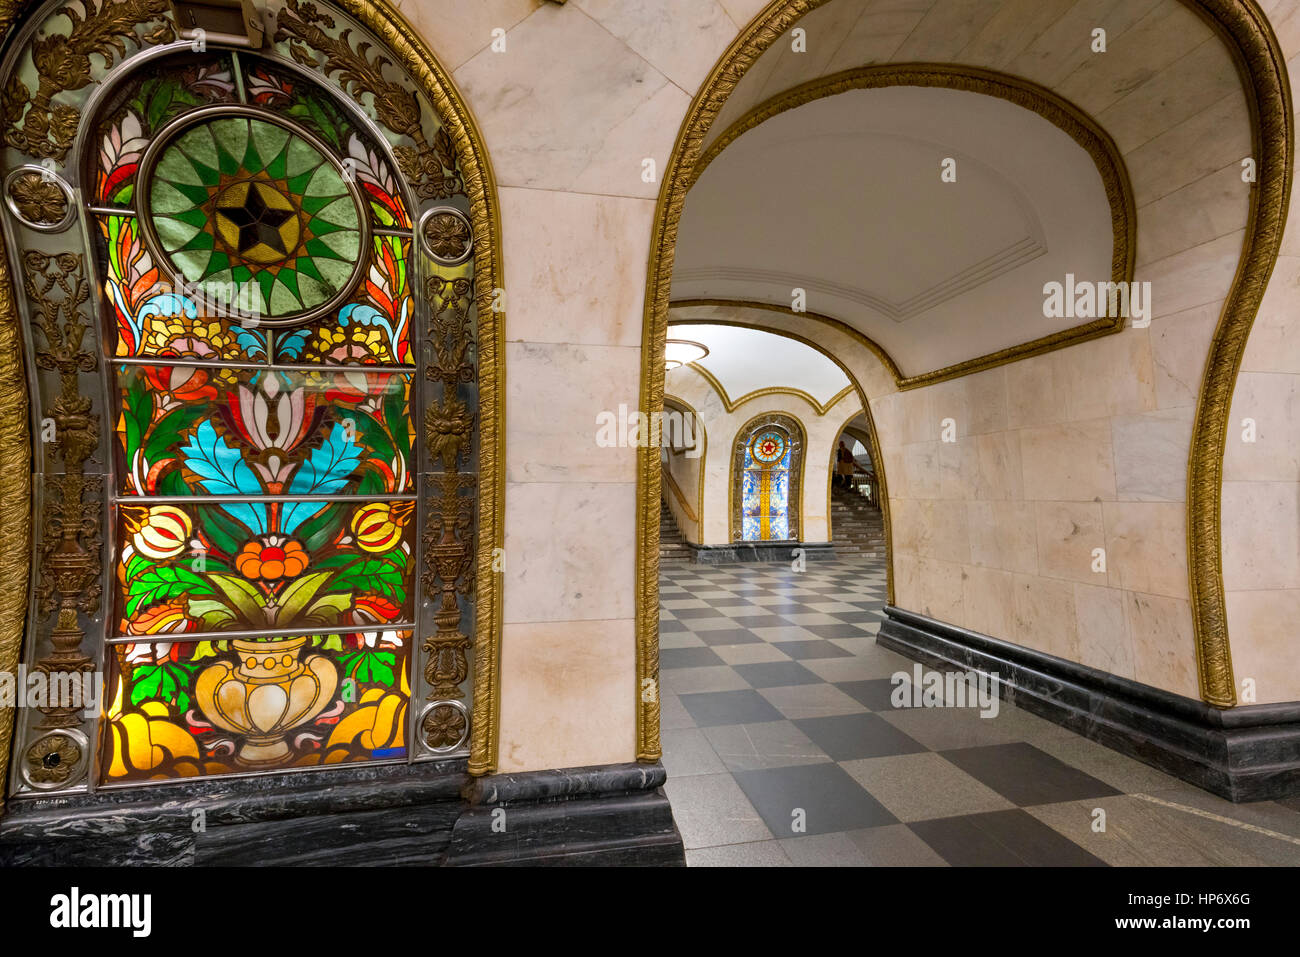 Interior of the Novoslobodskaya Metro Station, Moscow, Russian Federation Stock Photo